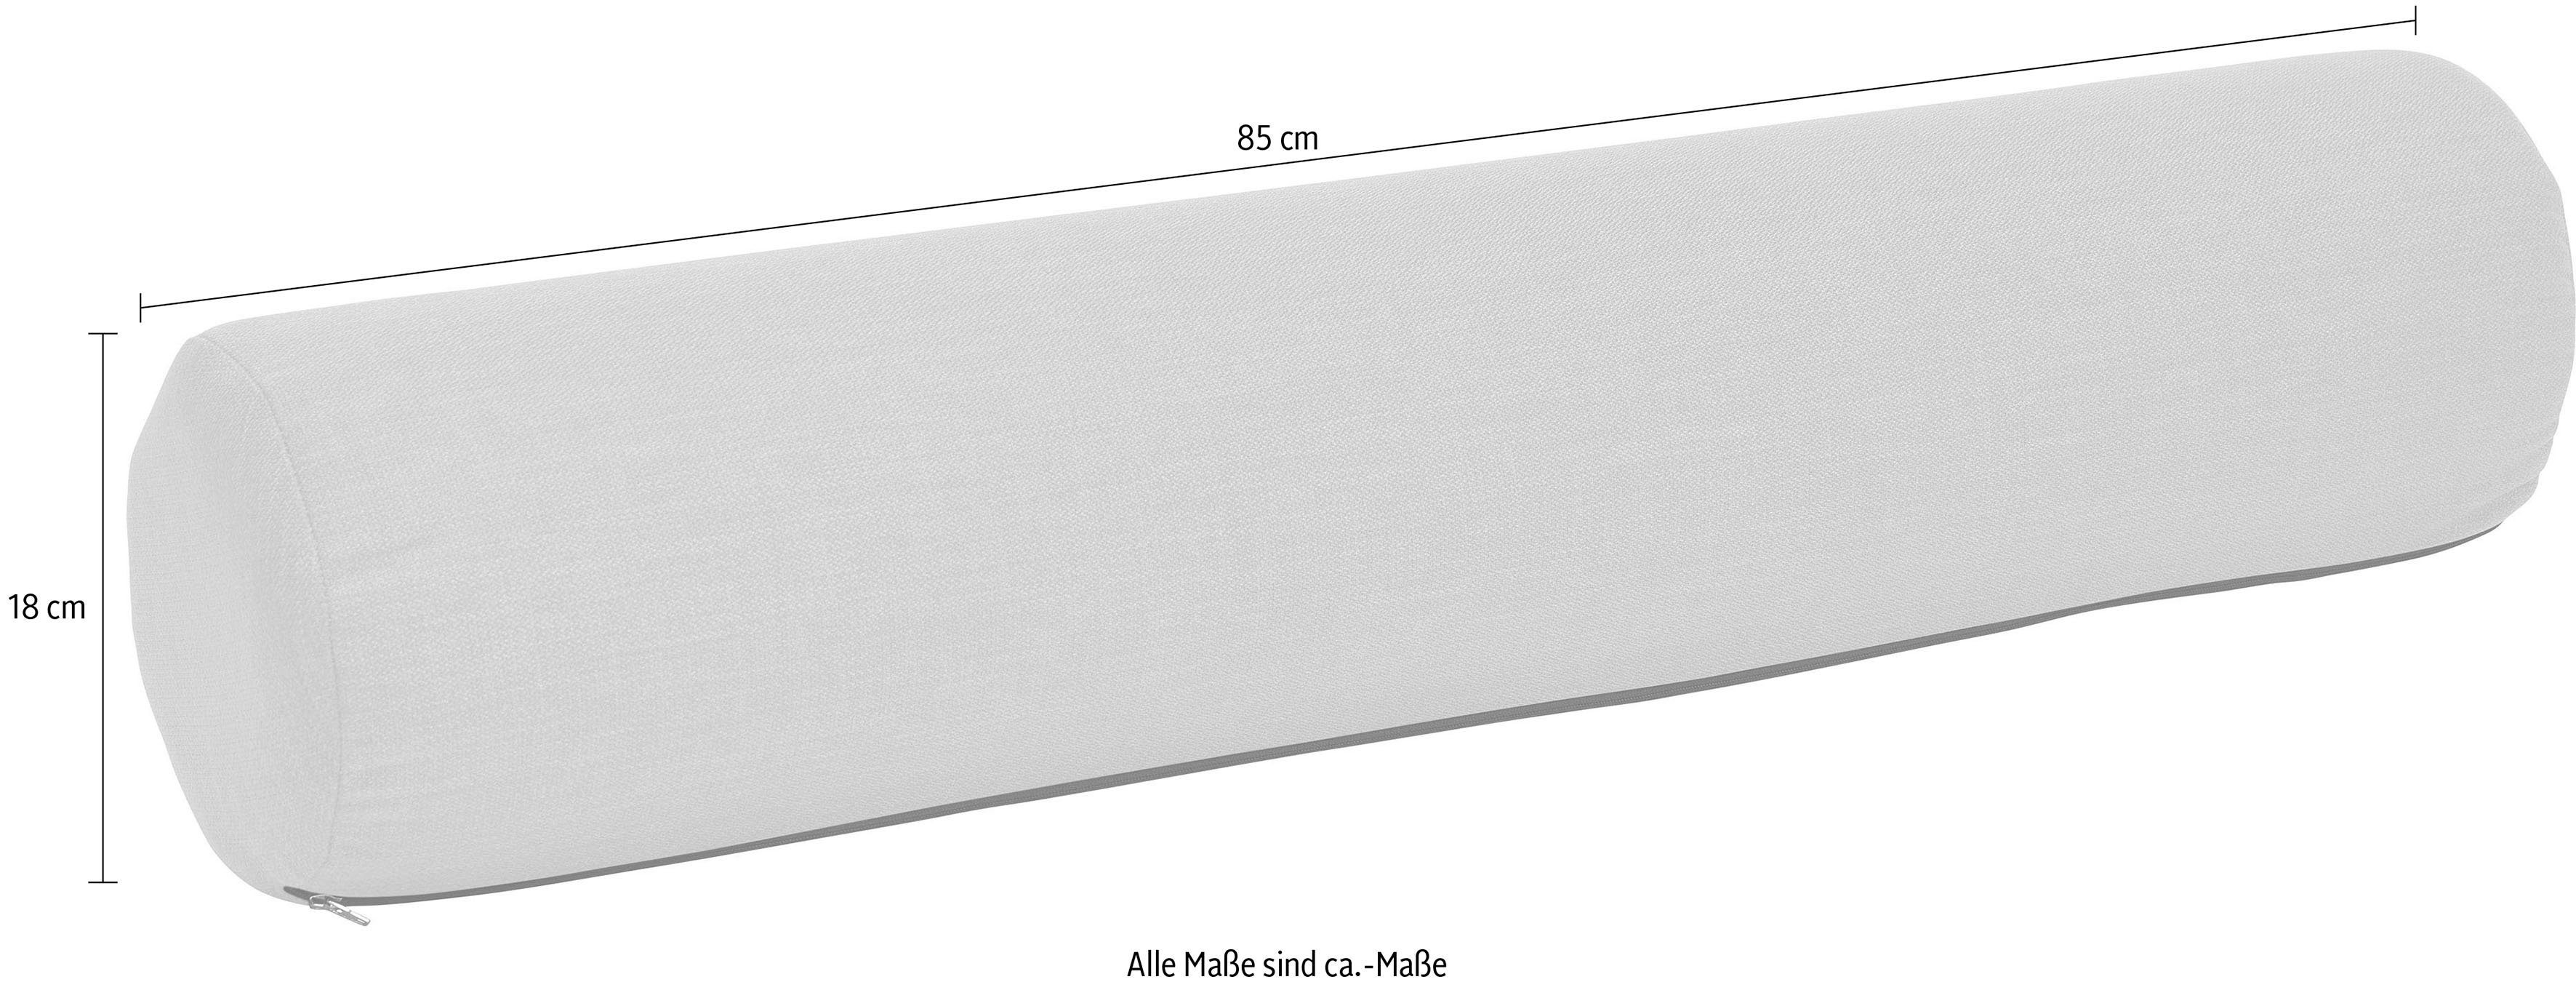 Müller SMALL LIVING Kopfstütze Fiord hochwertigem 0662 Designstoff in Stoff flieder bezogen 2 RG-25-Nackenrolle, KVADRAT